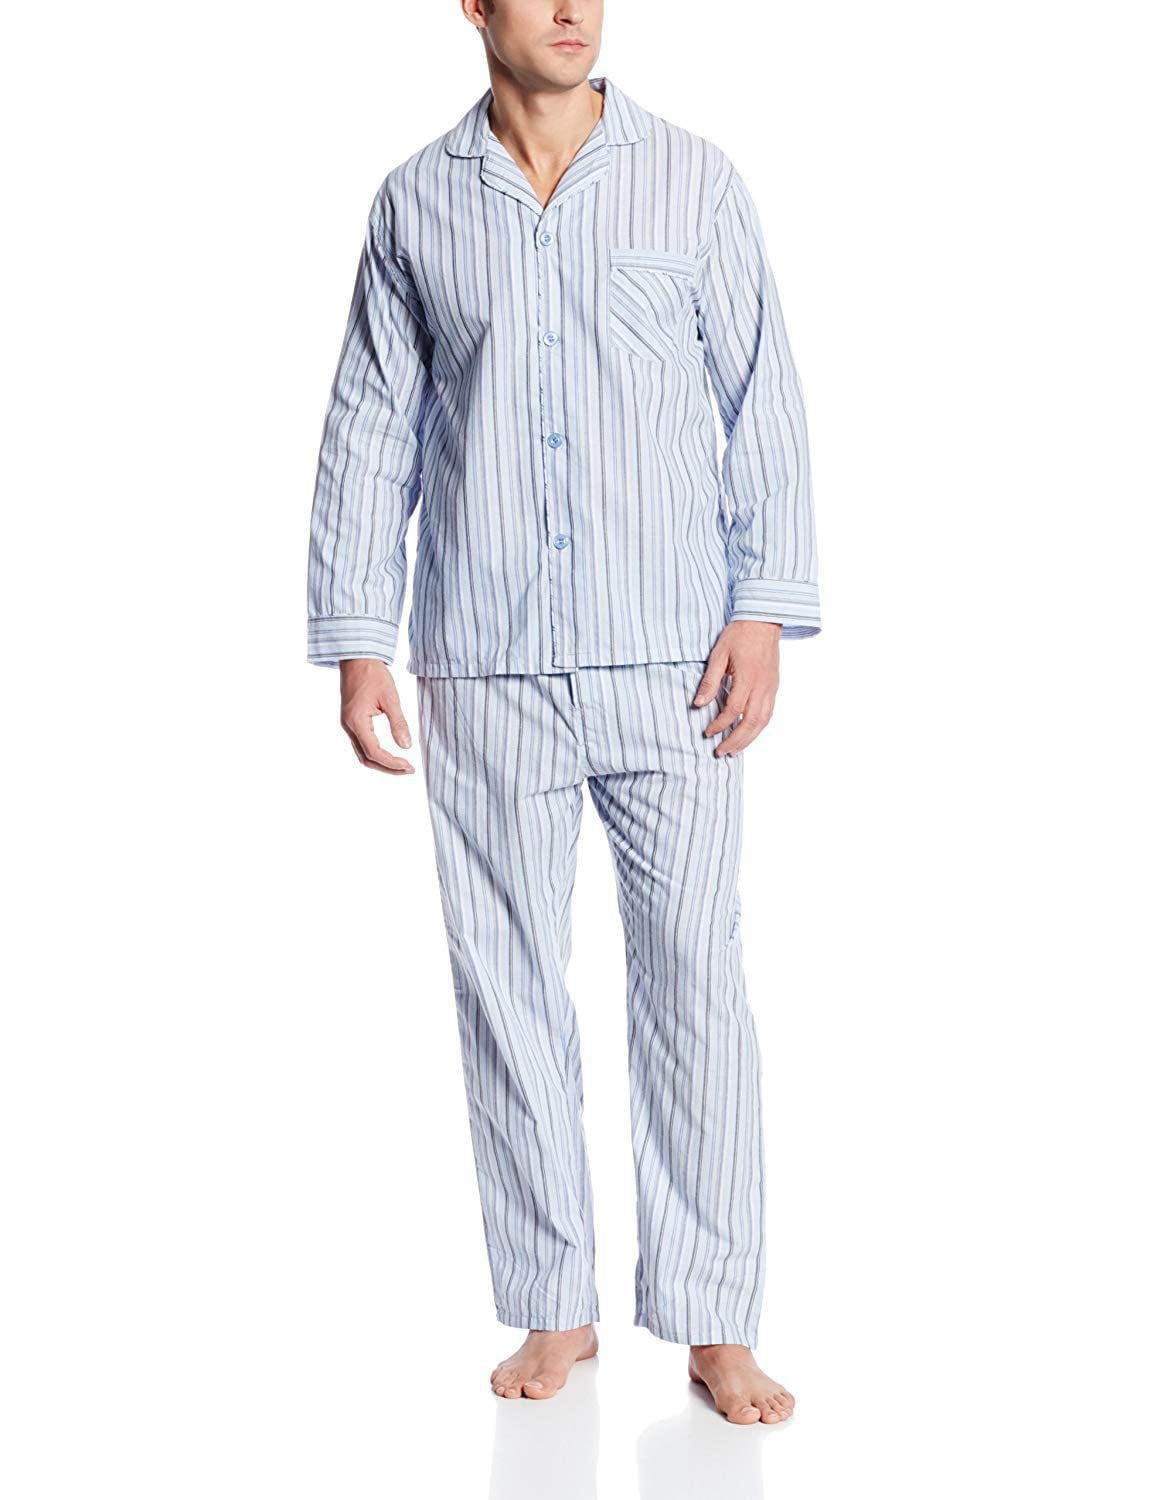 Hanes Men's Broadcloth Pajama Set, Blue Stripe, Large - Walmart.com